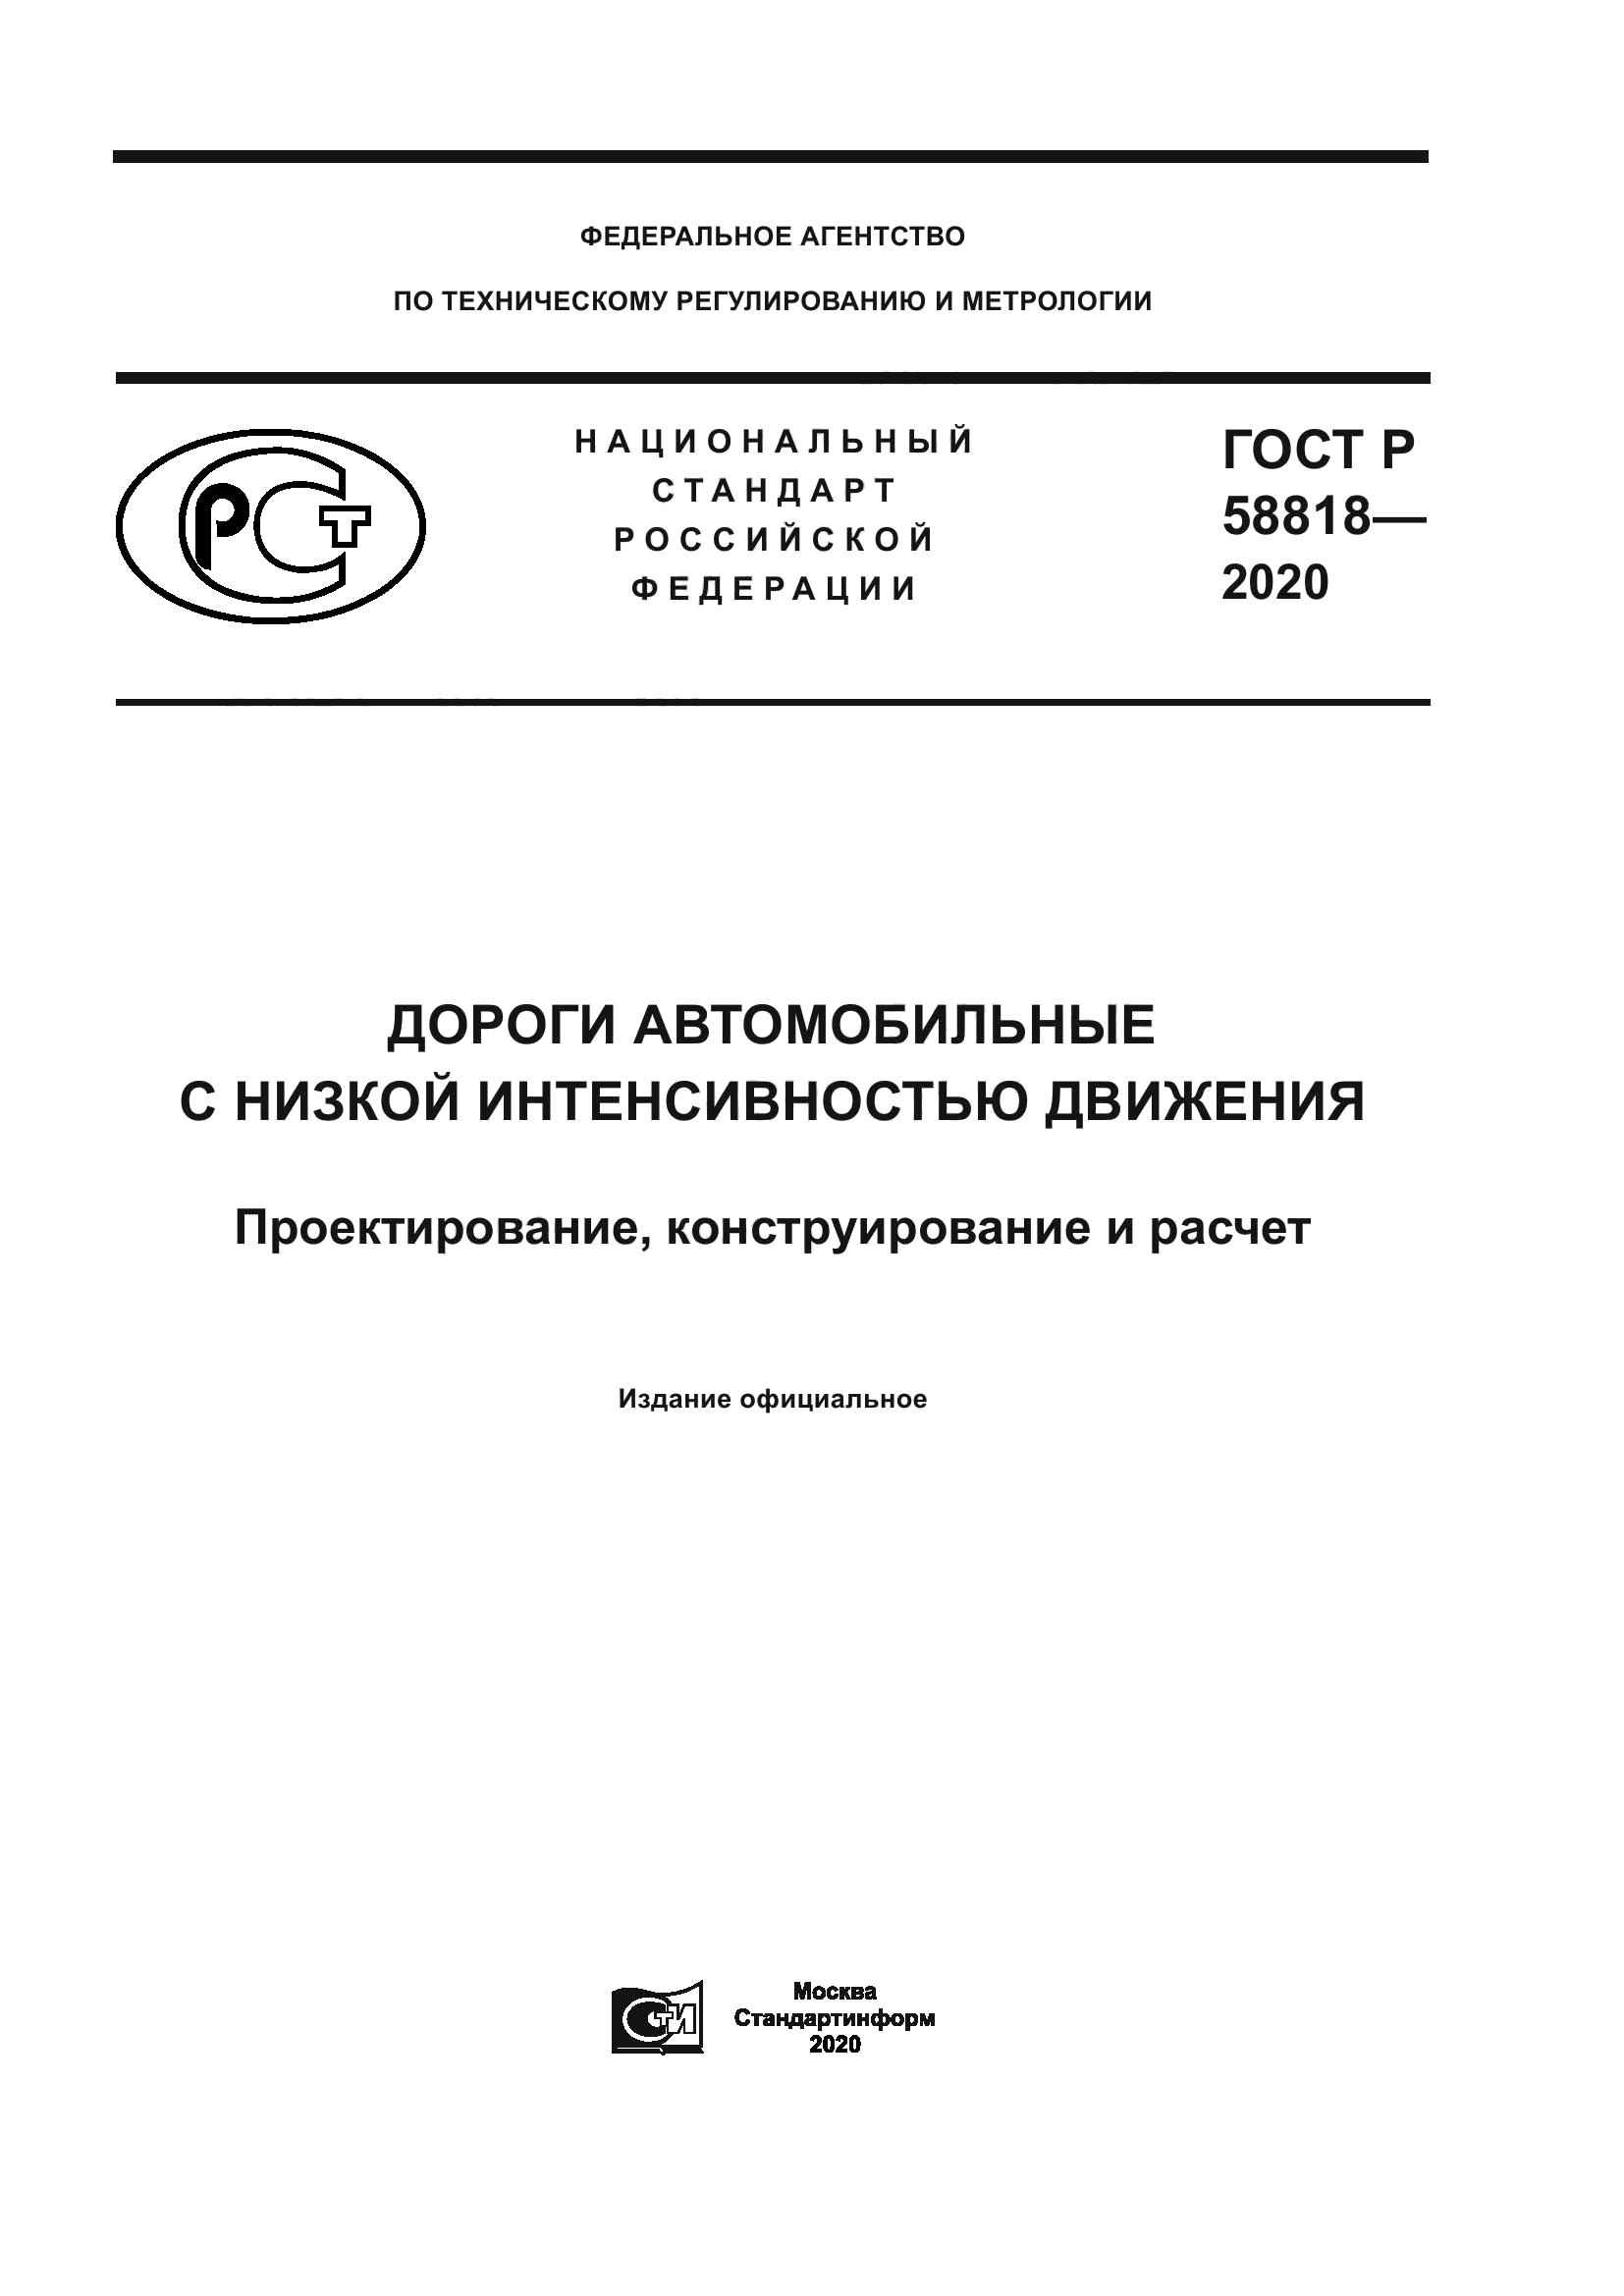 ГОСТ Р 58818-2020